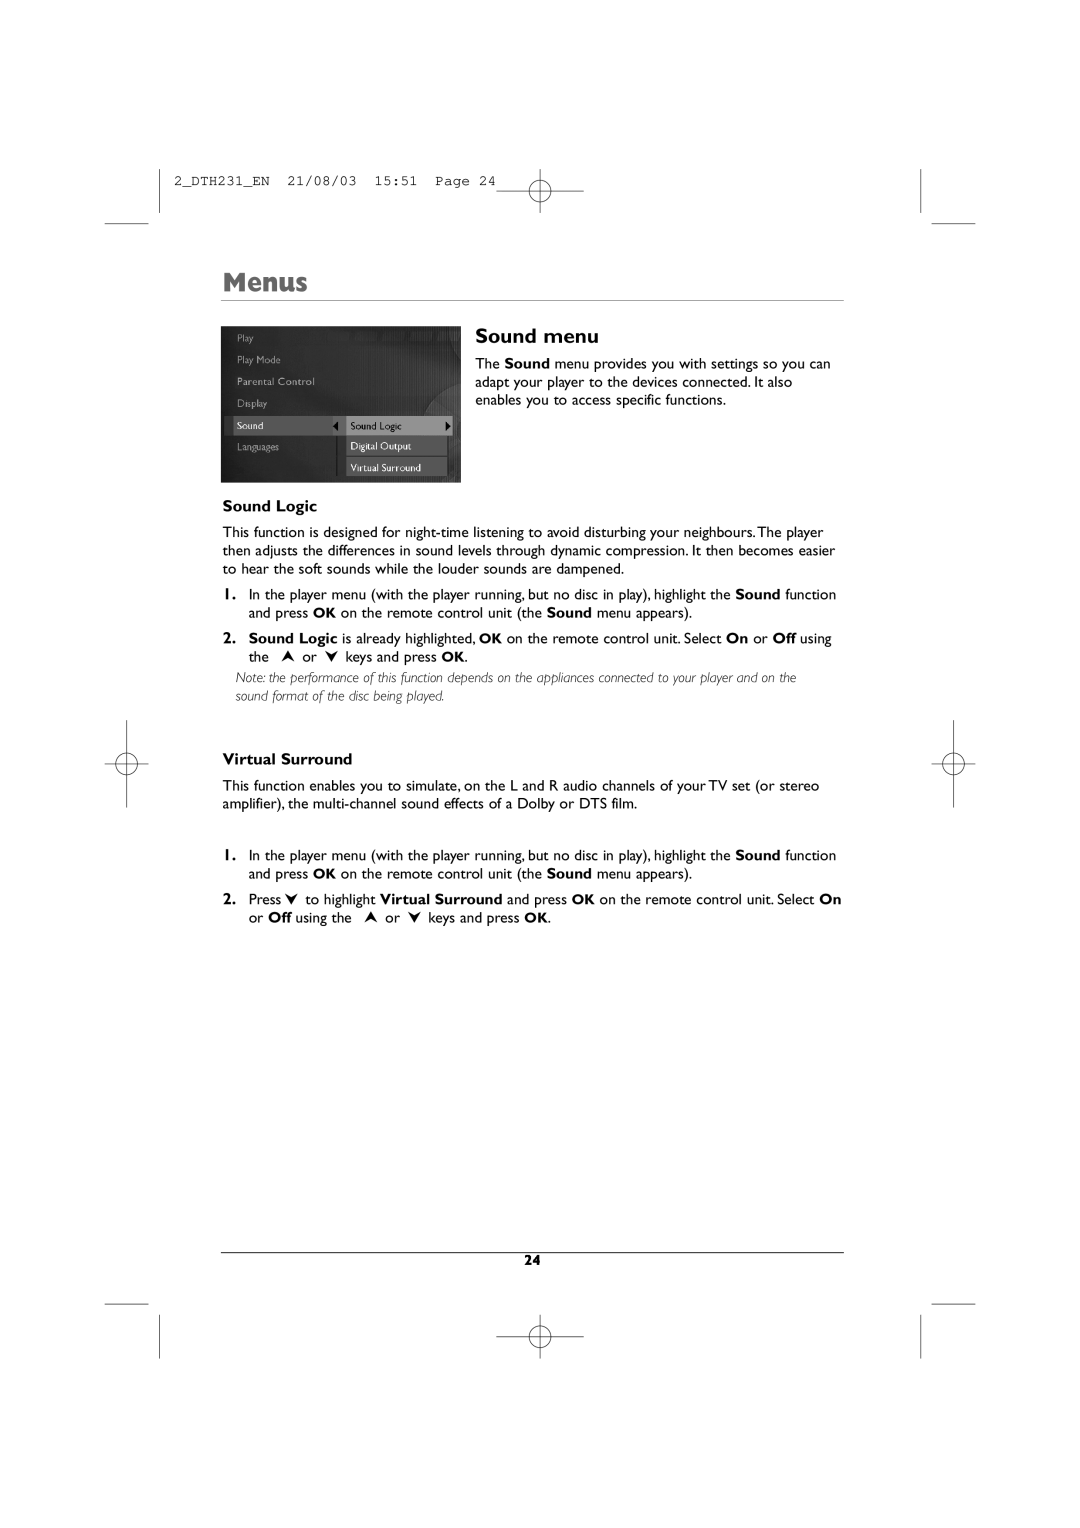 Technicolor - Thomson DTH231 manual Sound menu, Sound Logic, Virtual Surround, Menus 